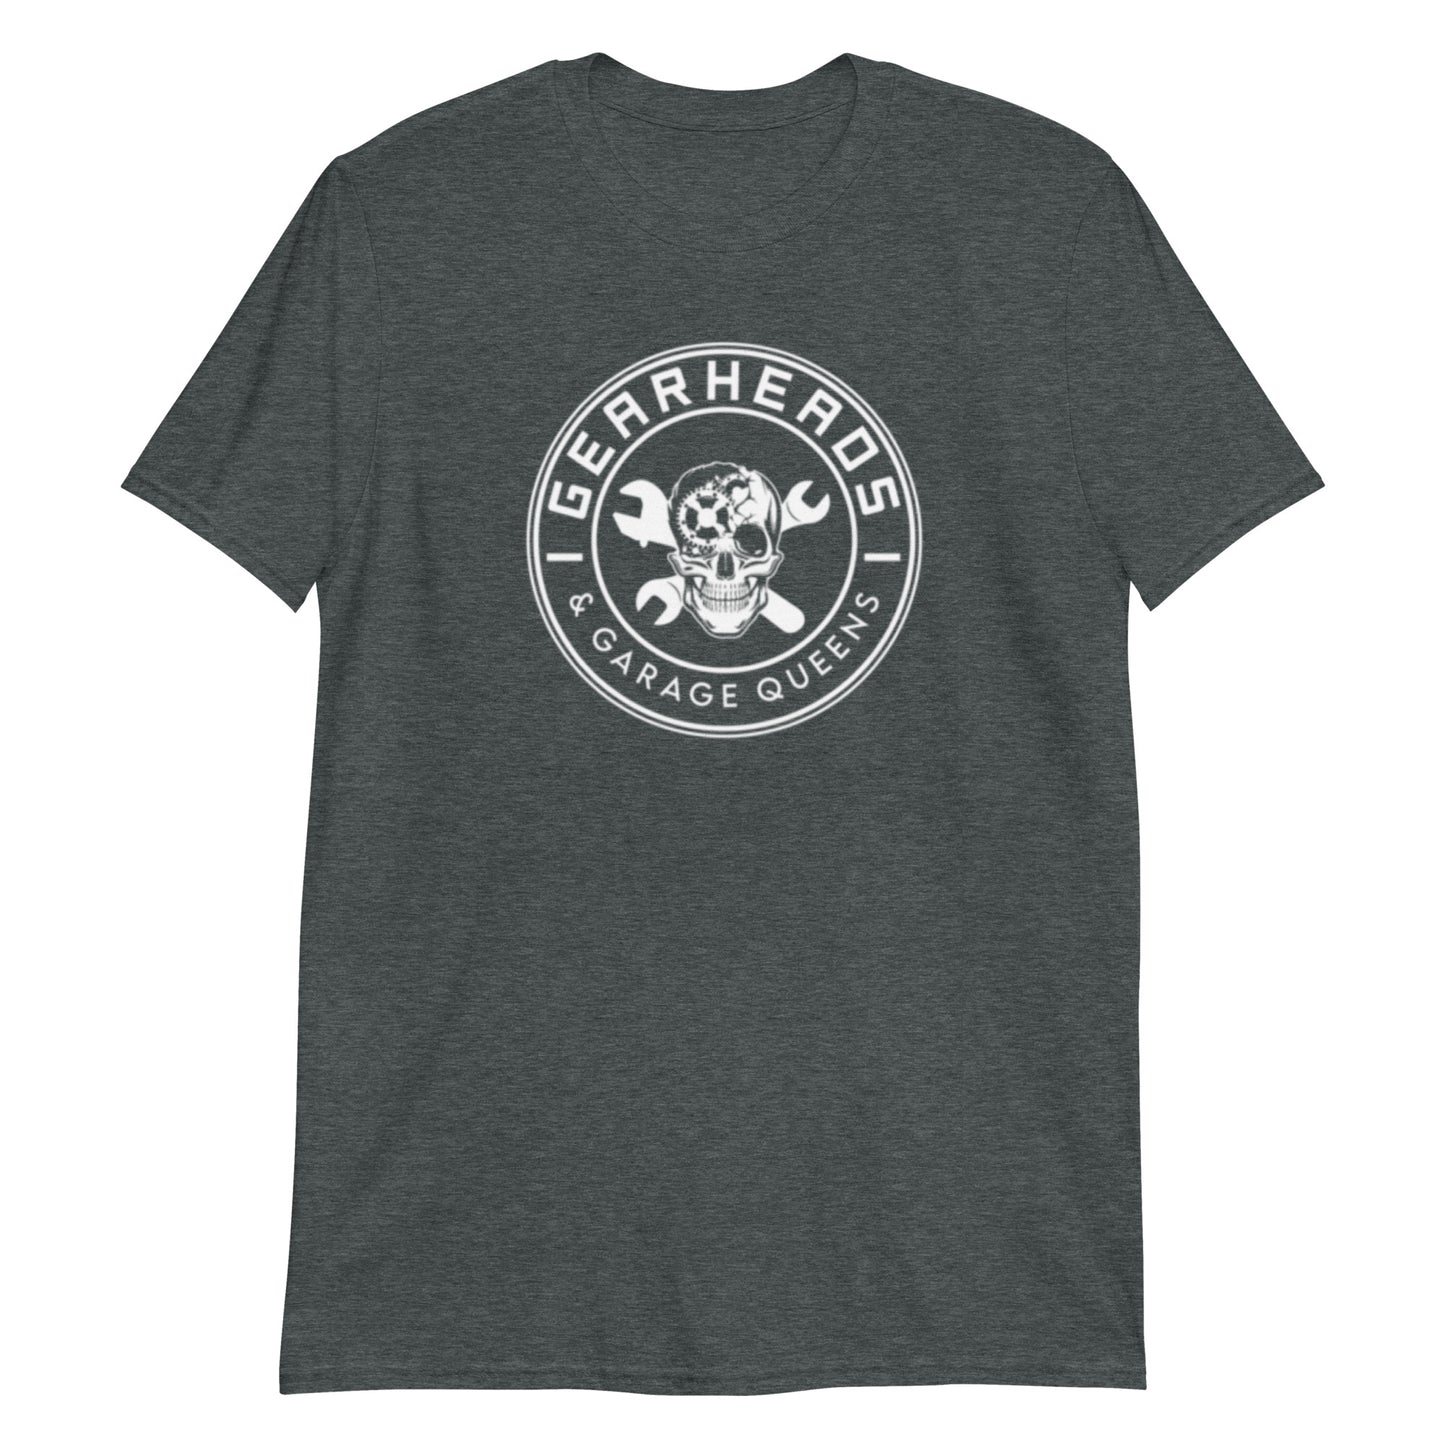 Gearheads and Garage Queens Short-Sleeve Unisex T-Shirt